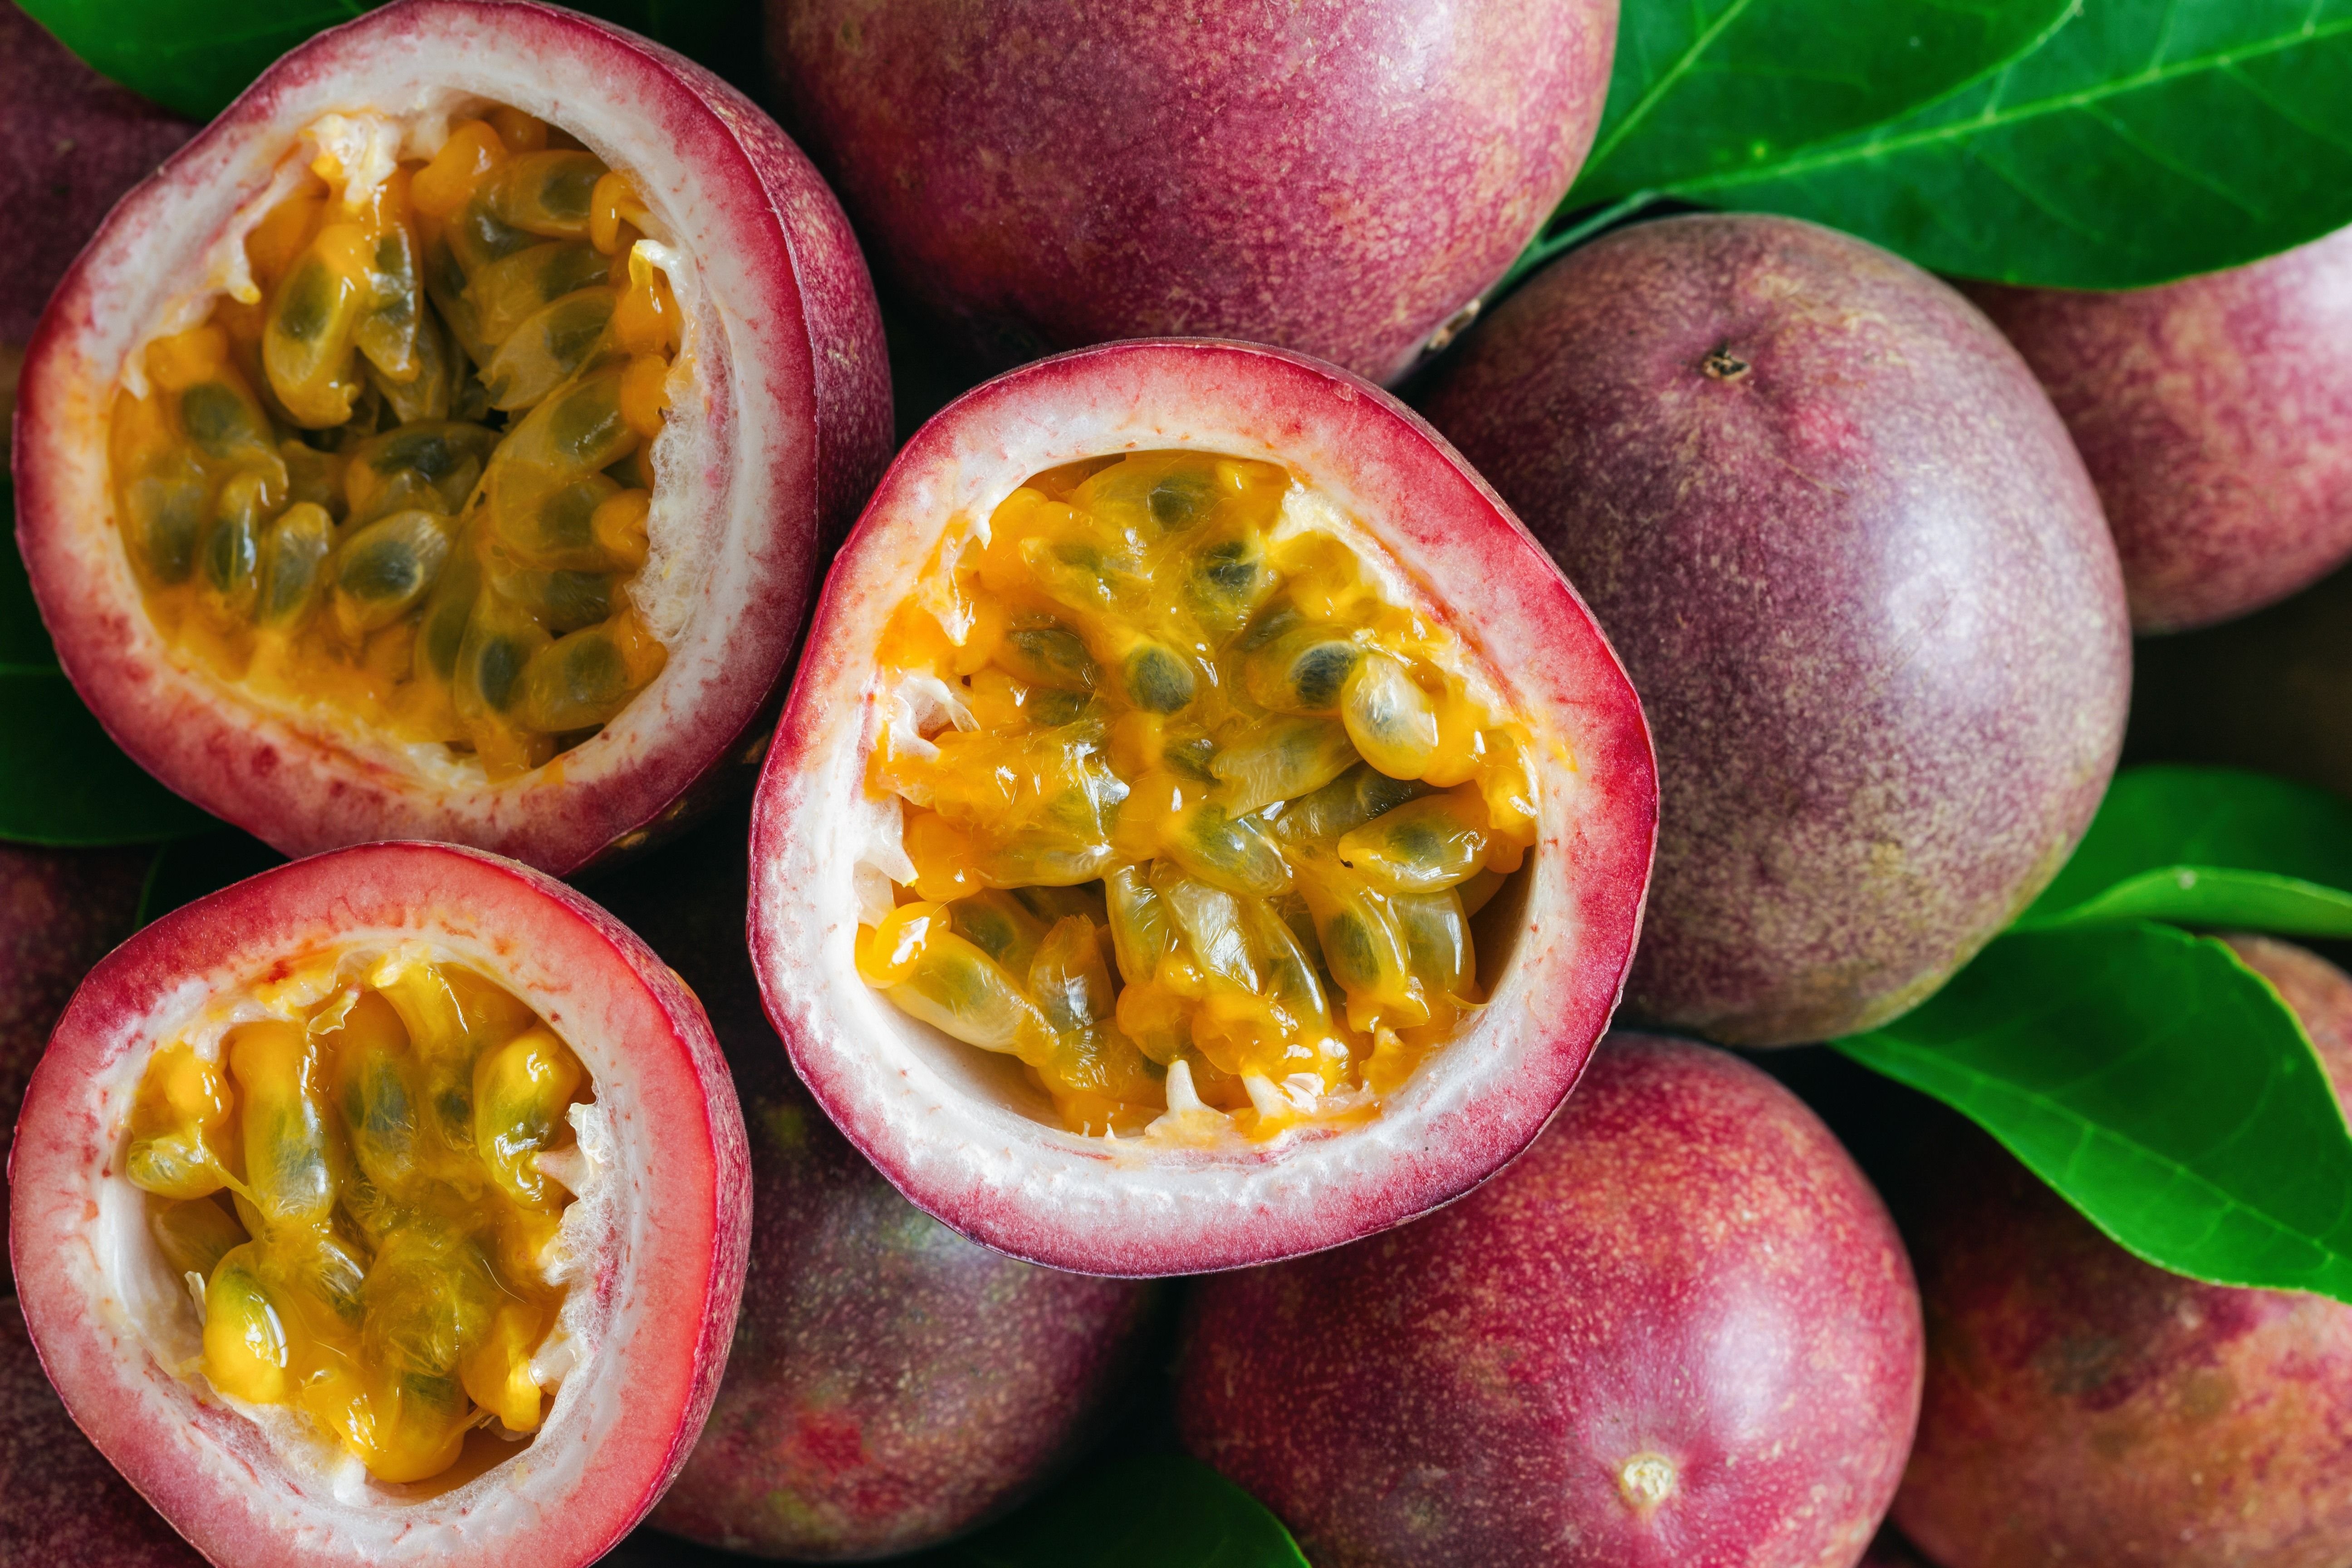 Passion fruit orange guava перевод. Маракуйя Пэшн Фрут. Манго папайя маракуйя. Маракуйя Тайланд. Папайя питахайя маракуйя.